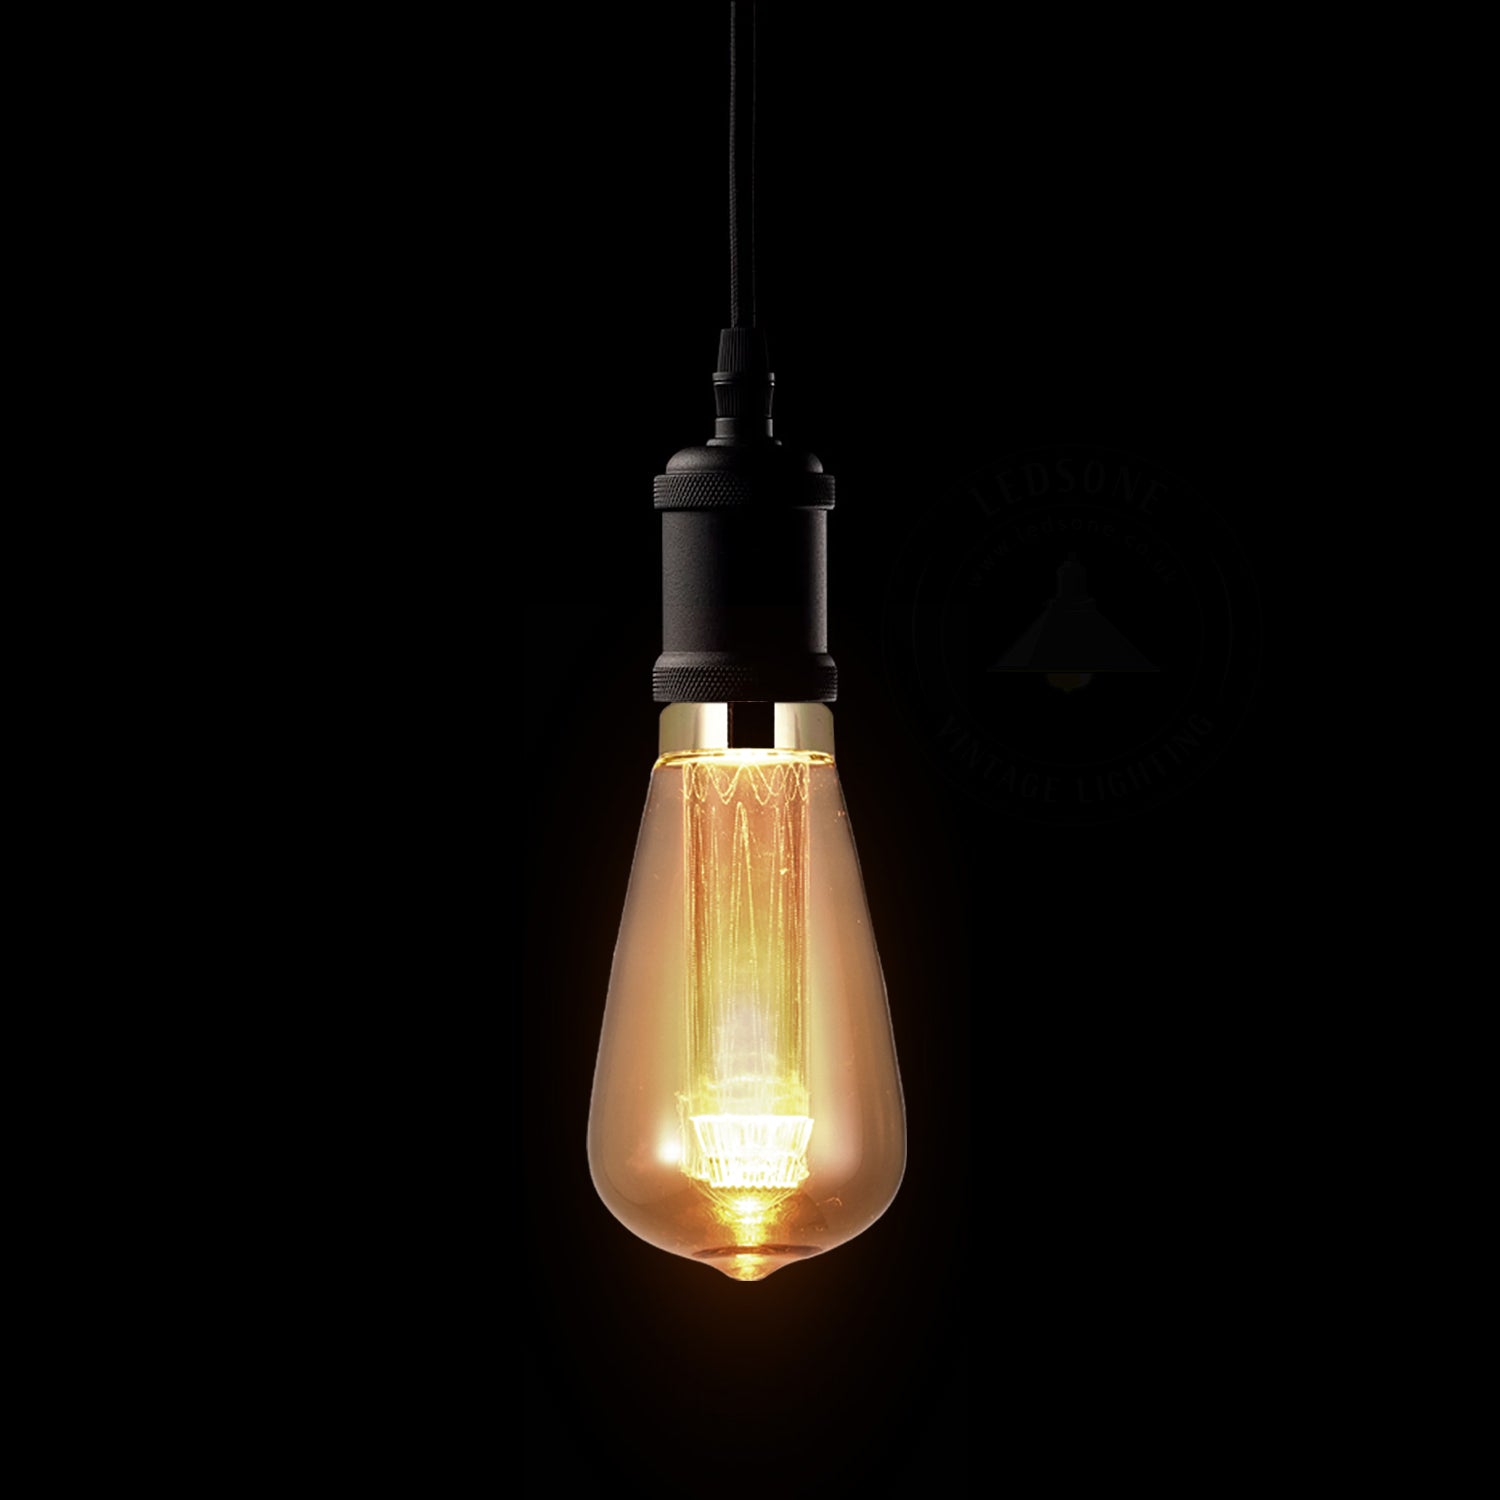 E27 Vintage Edison light bulb 3W Non dimmable filament bulb-Application